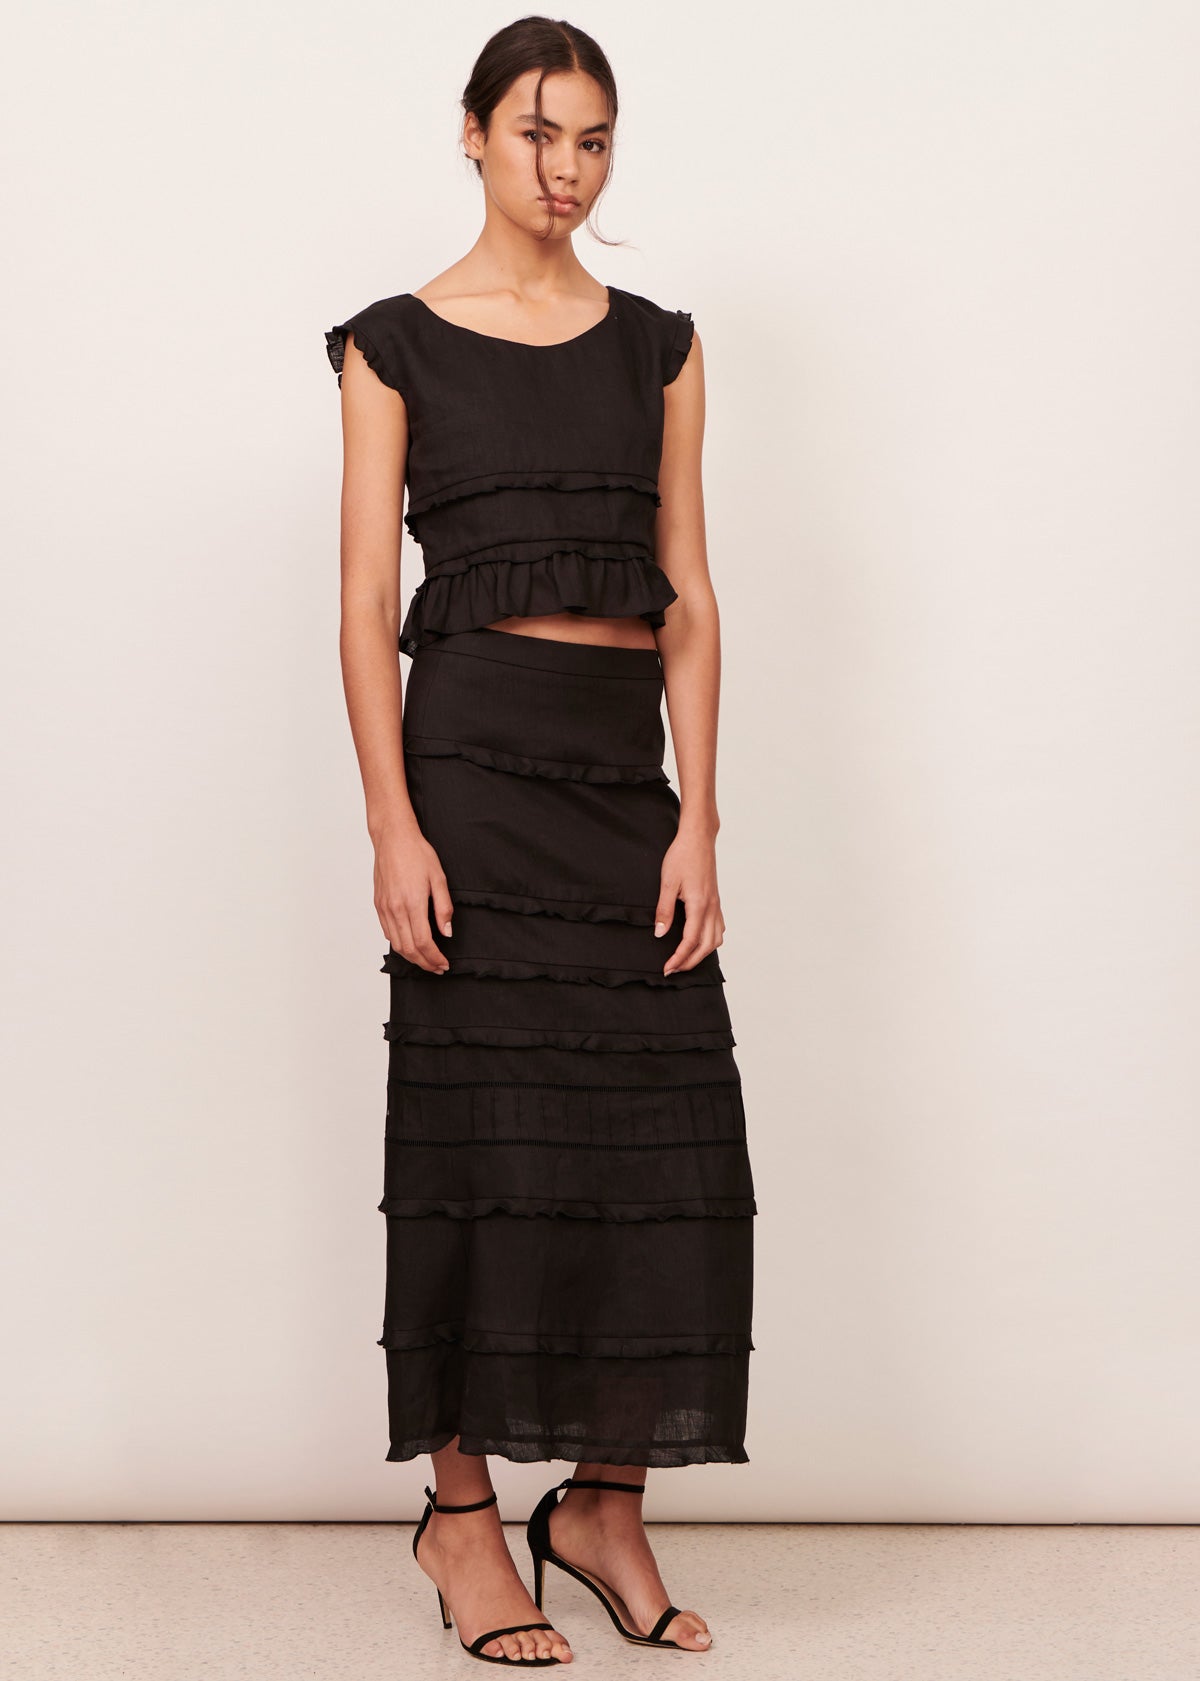 Eloise Top & Skirt Set - Black